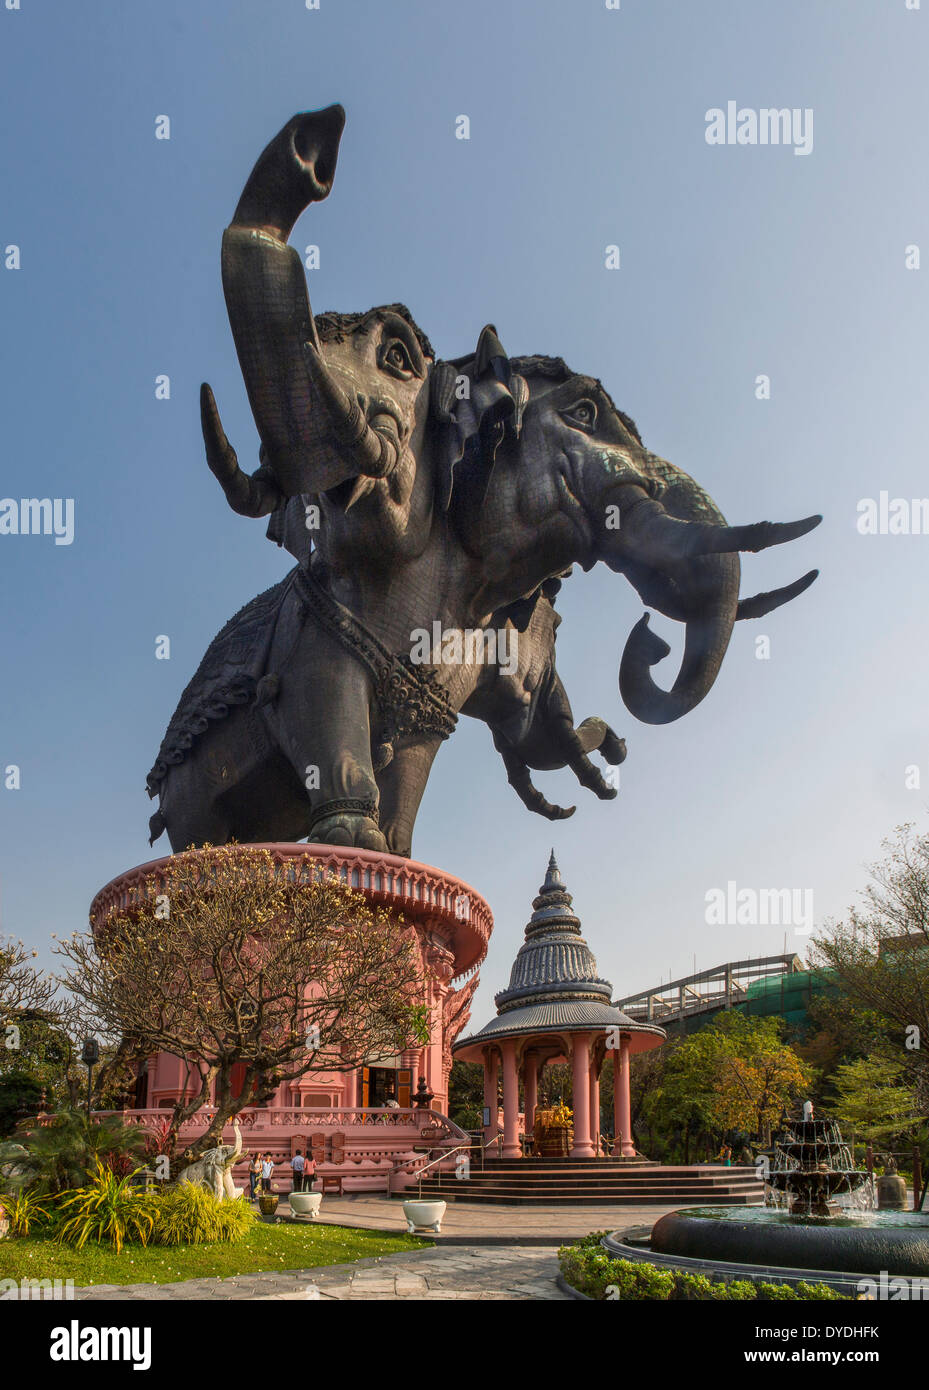 Thailand, Asien, Bangkok, Erawan, Architektur, Kultur, Elefanten, Exterieur, Auswirkungen, Museum, Tourismus, Reisen, visuelle, seltsam Stockfoto